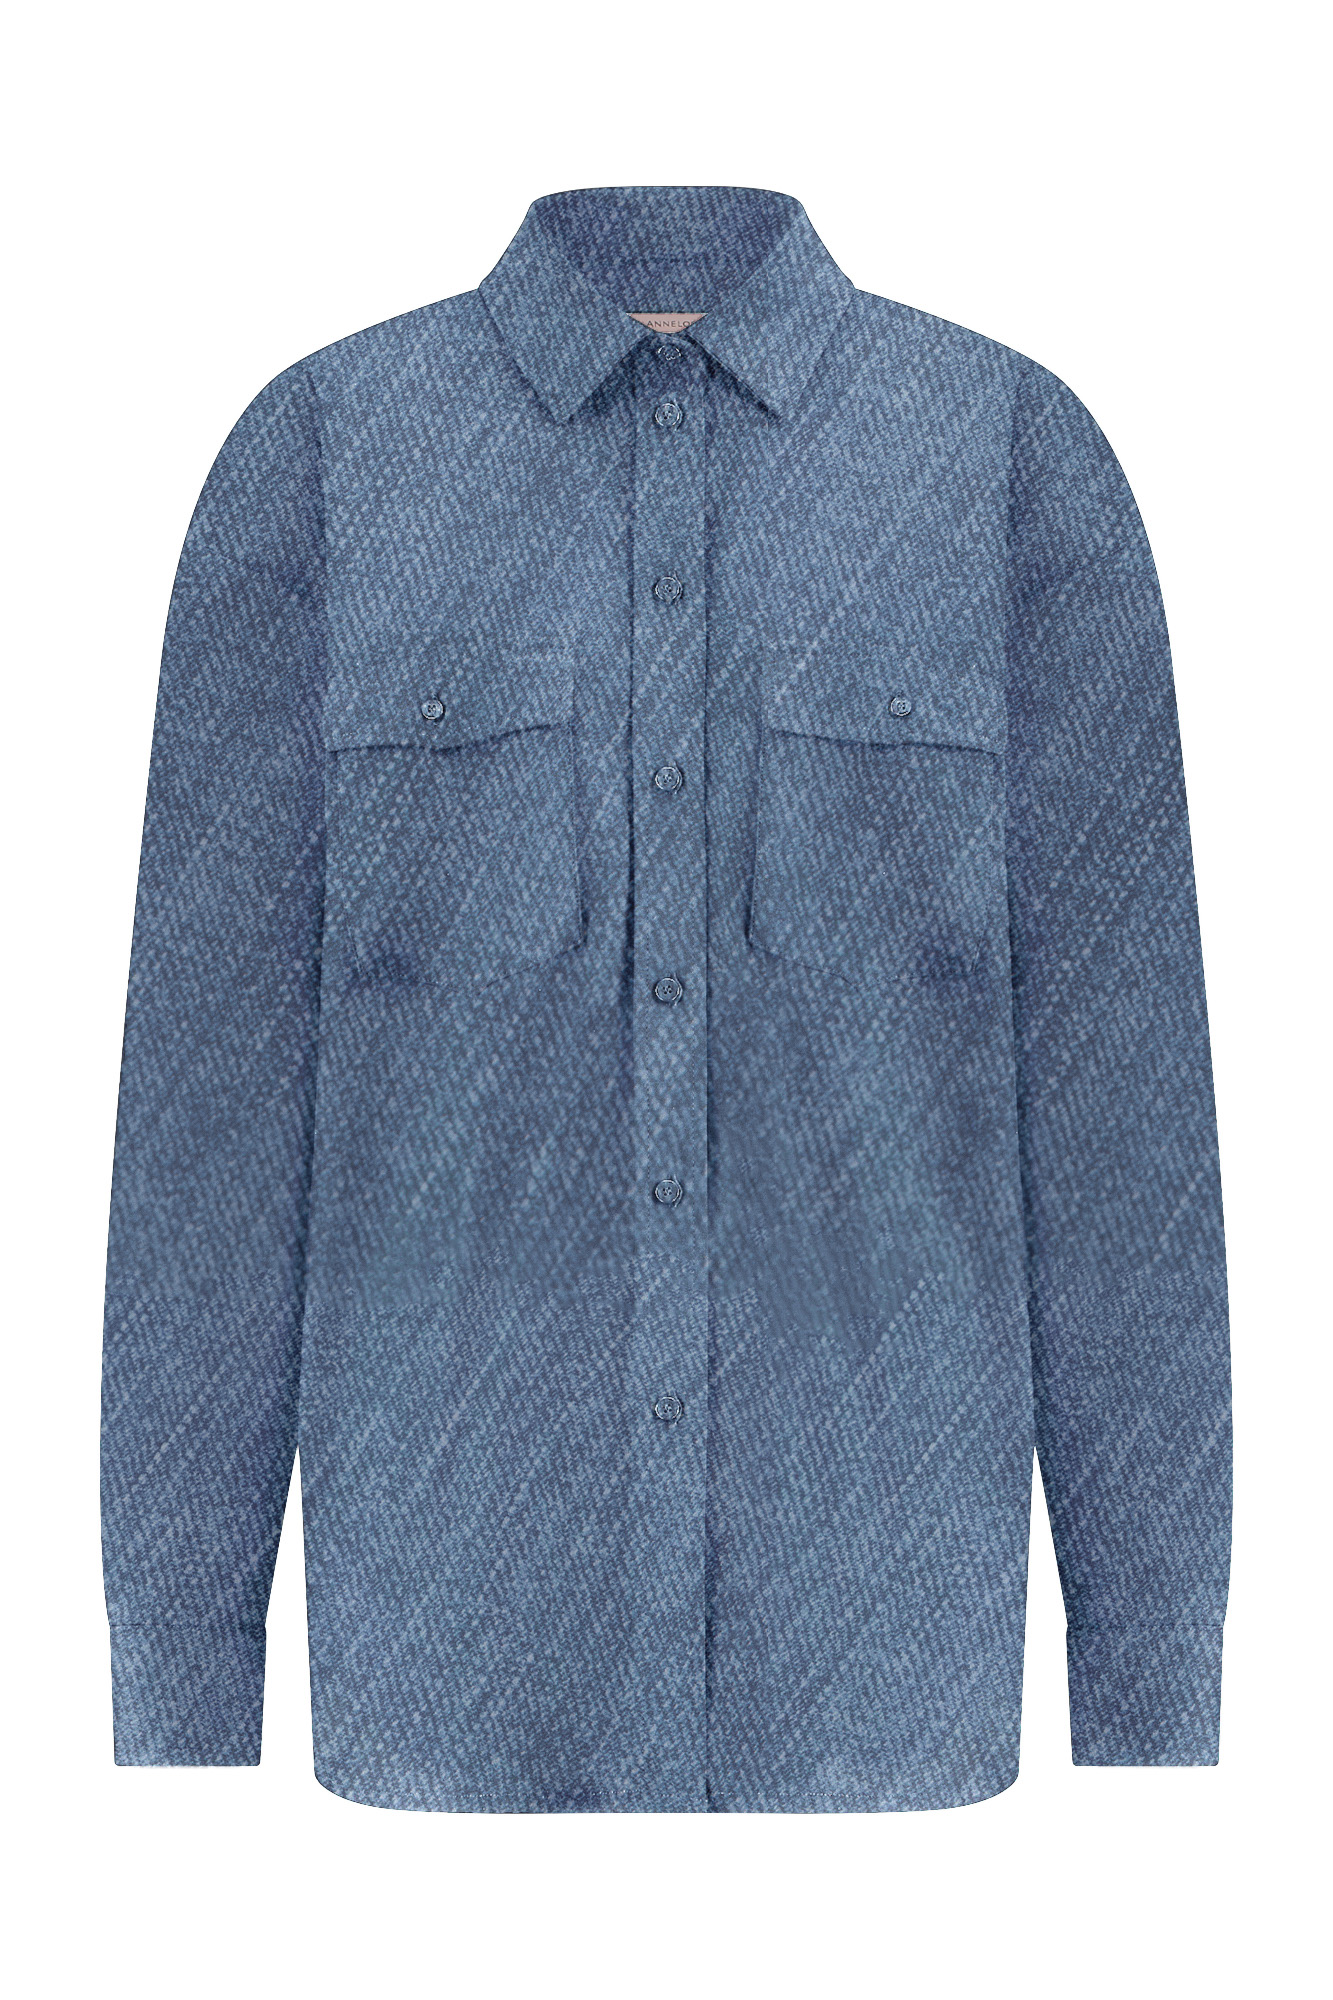 Studio Anneloes Denisa jeans blouse Blauw-1 1